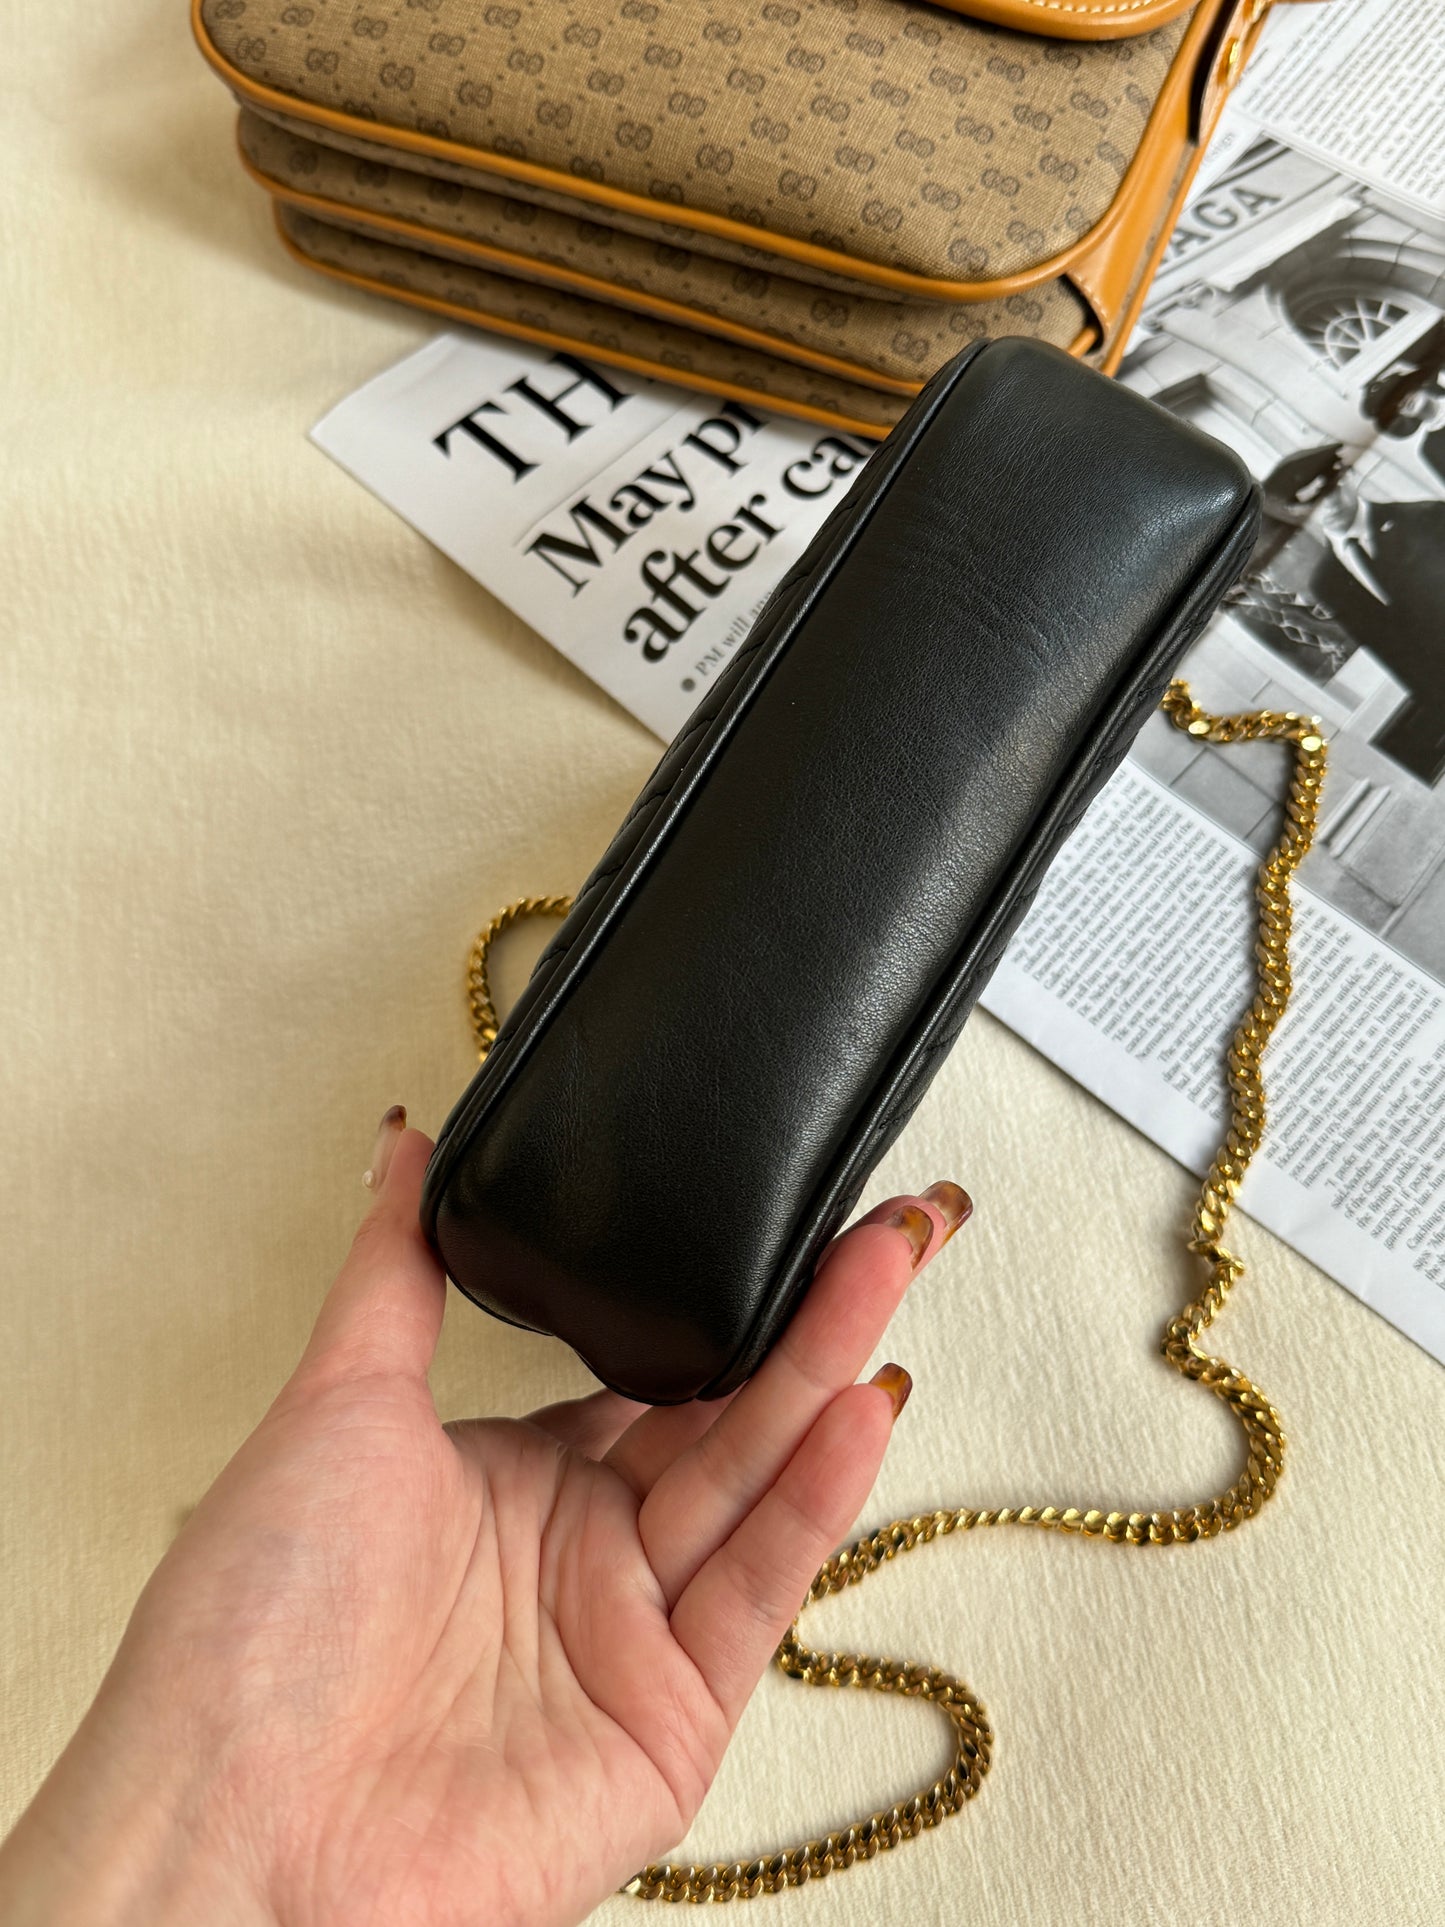 Vintage Celine 2-way chain bag